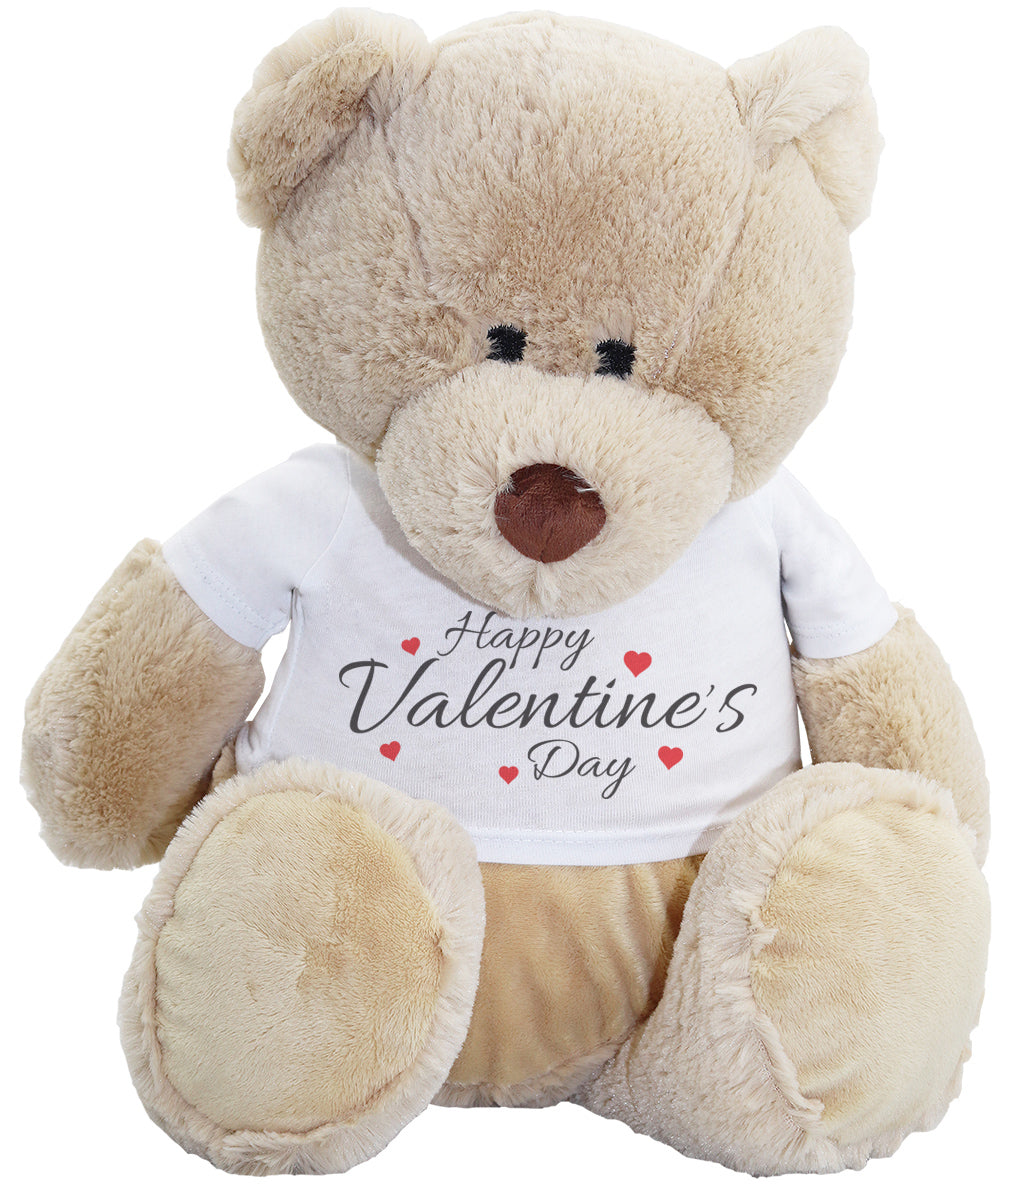 Happy Valentines Day - Teddy & Teddy T-Shirt Message